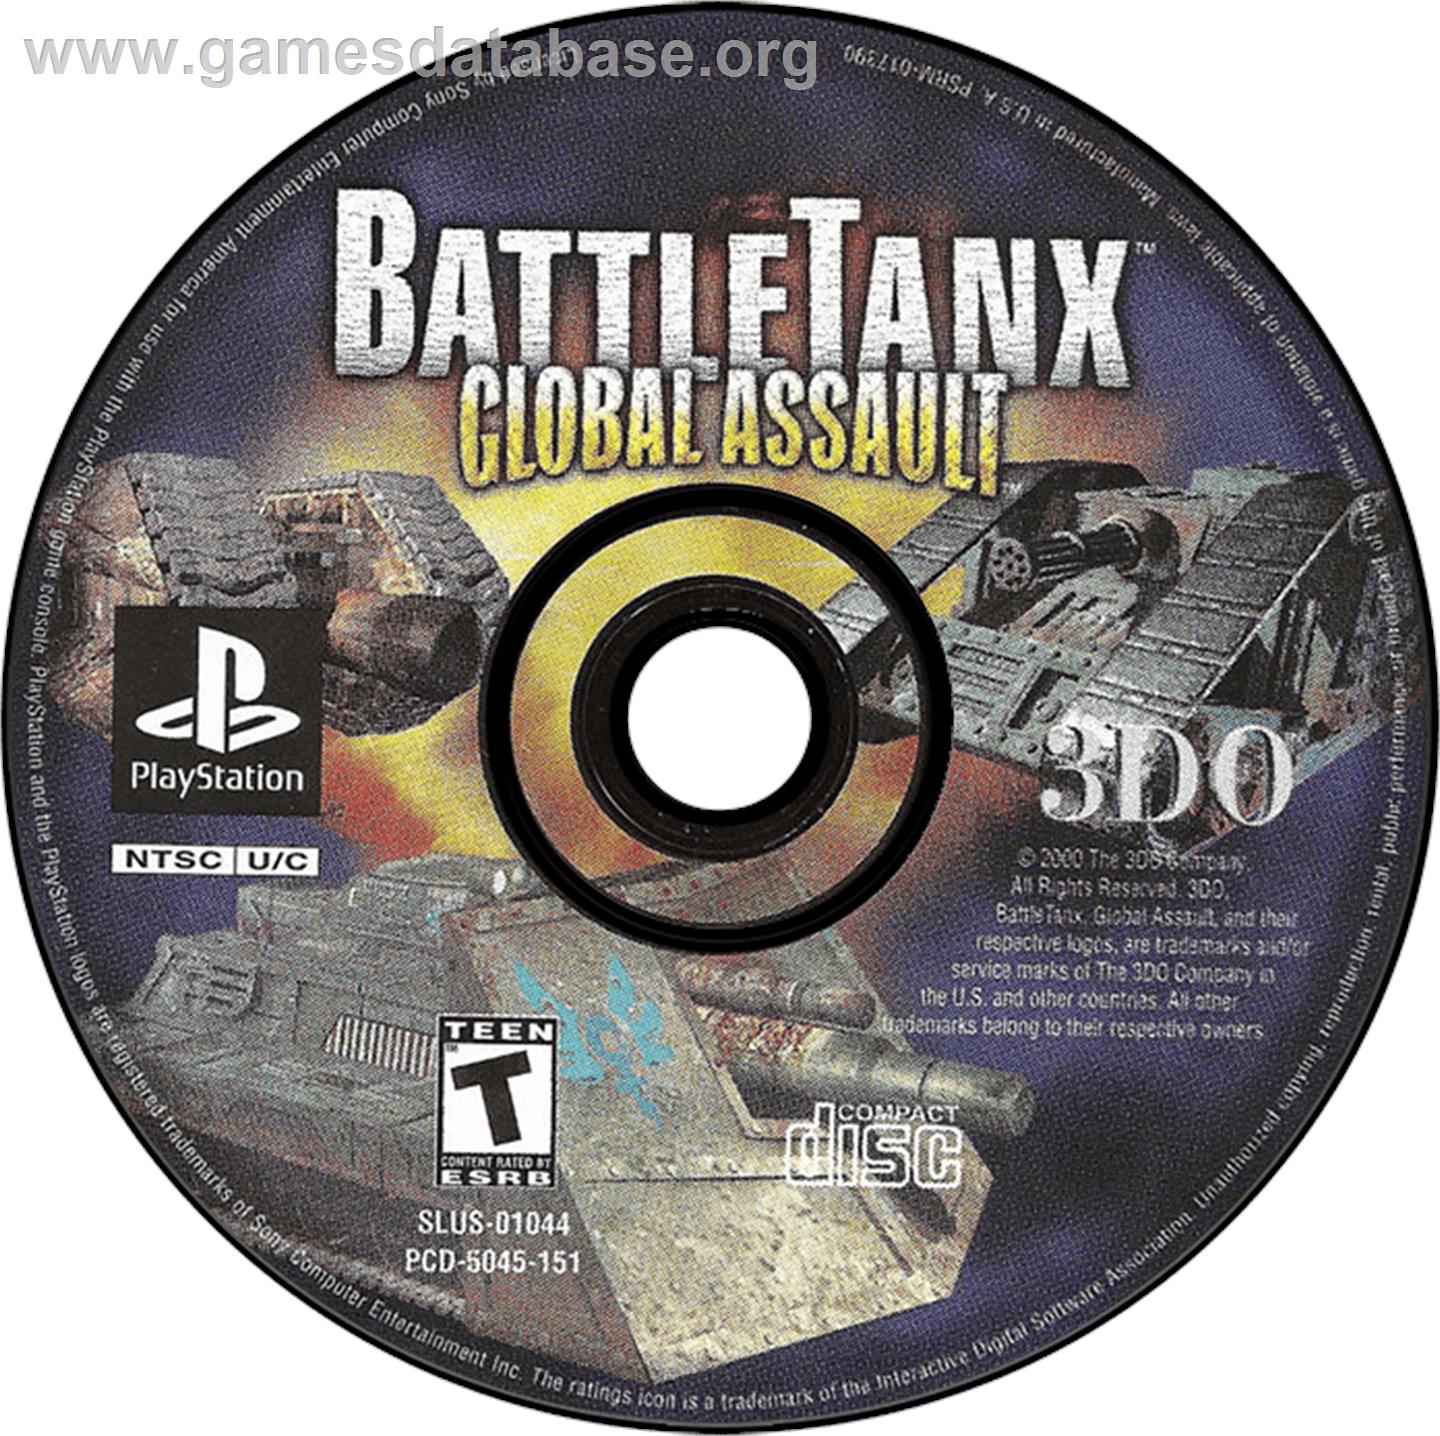 BattleTanx: Global Assault - Sony Playstation - Artwork - Disc